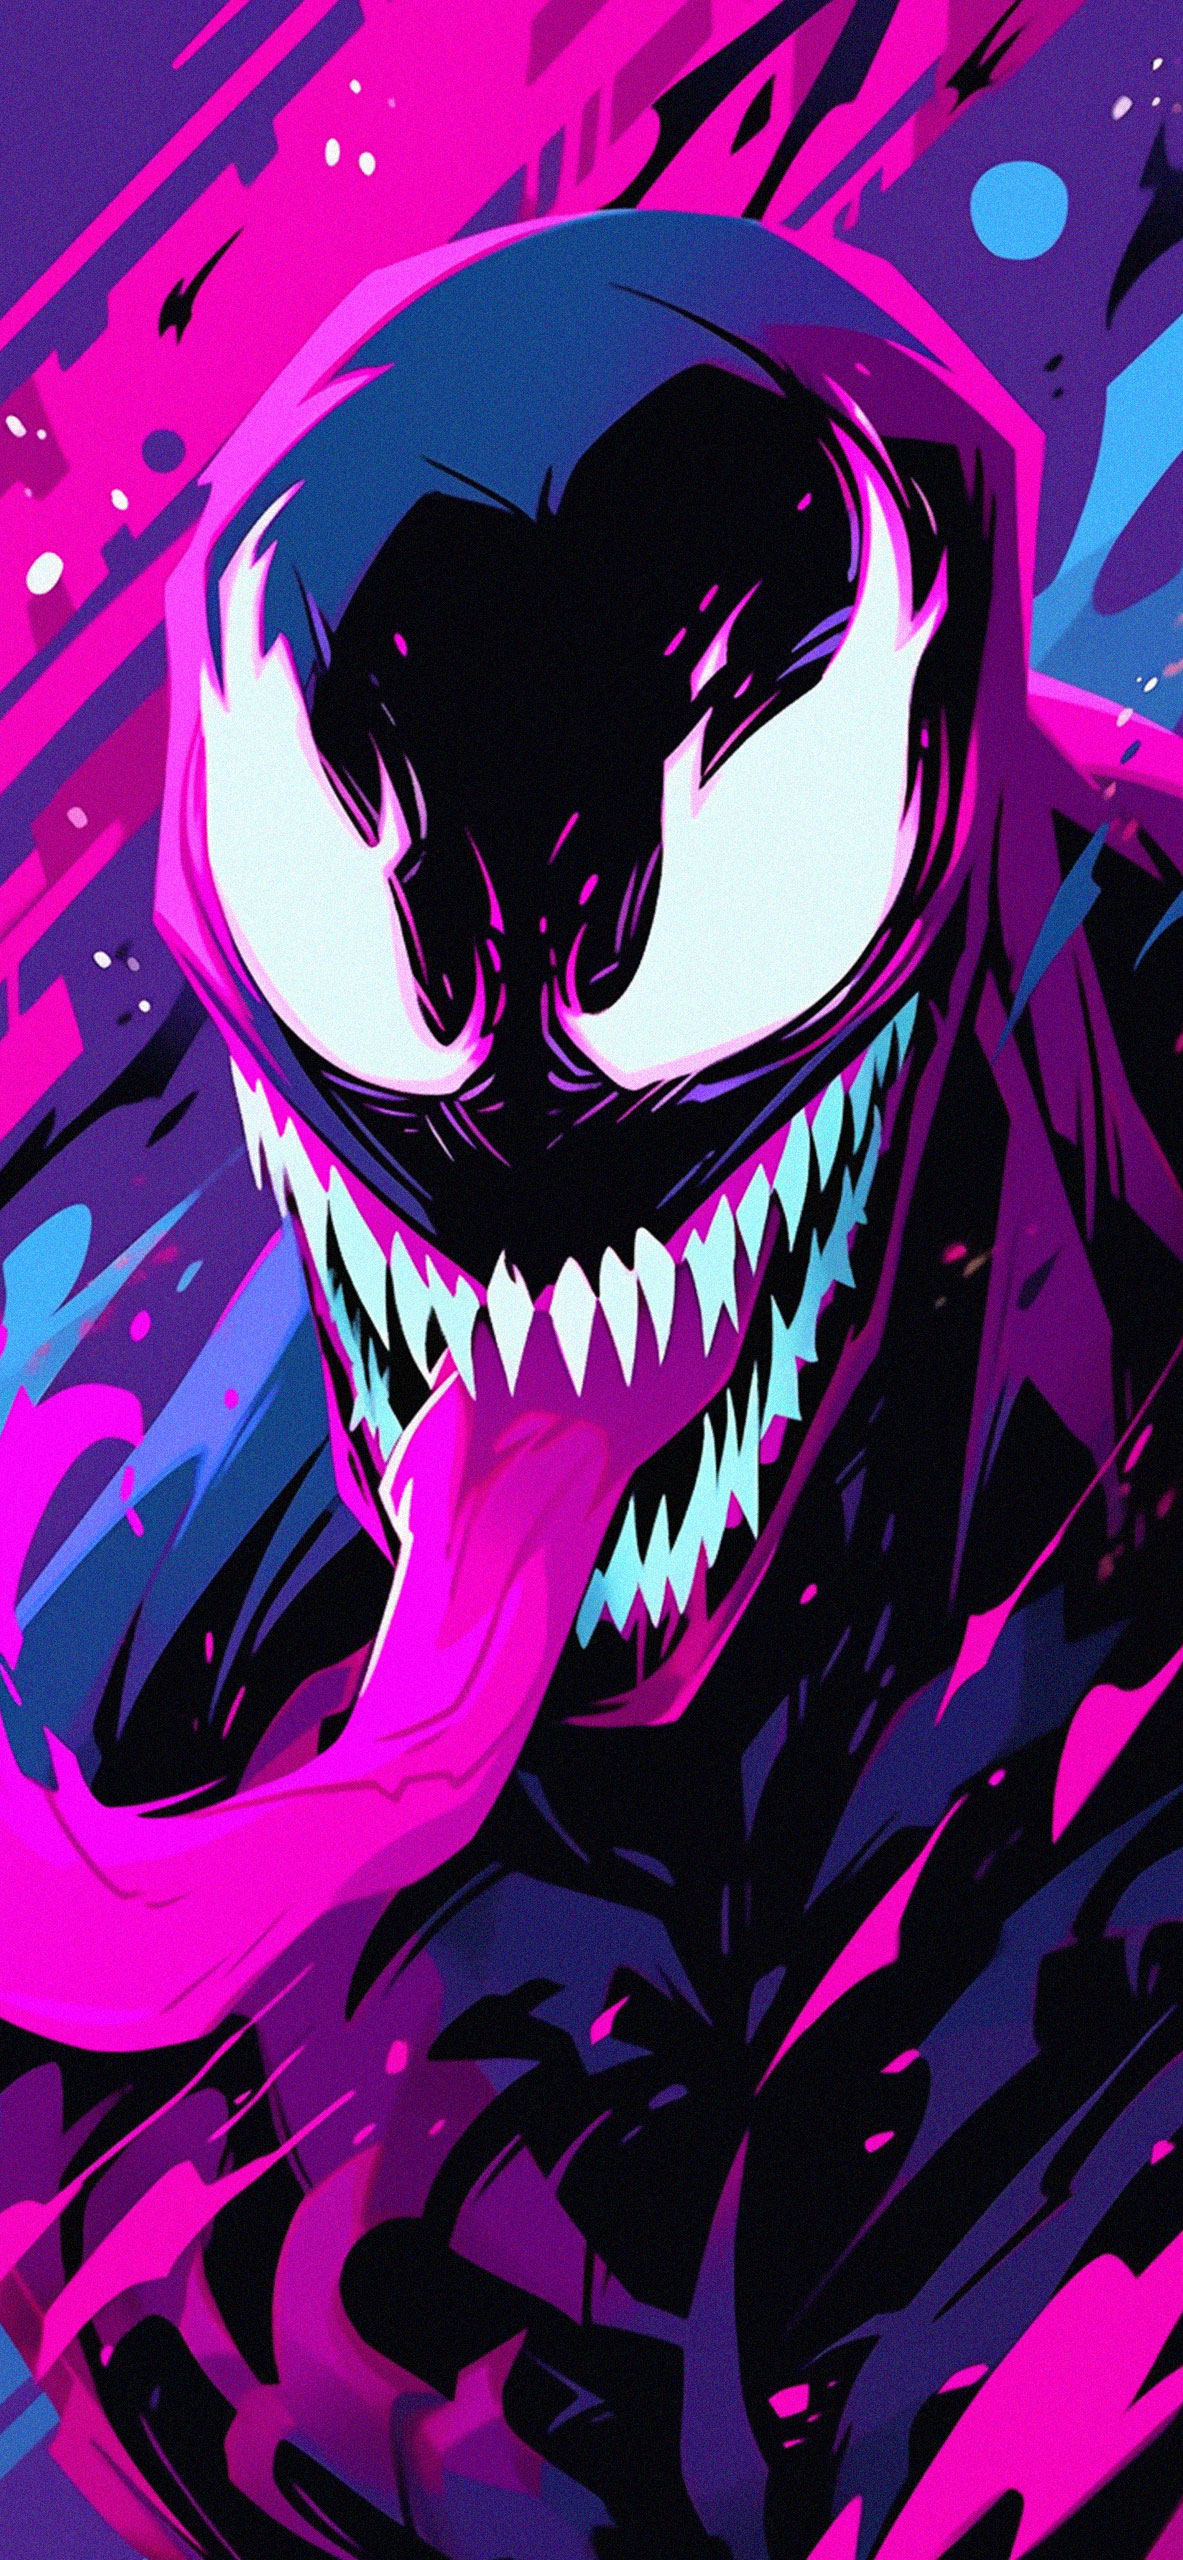 Comics Venom 4k Ultra HD Wallpaper by huyztr